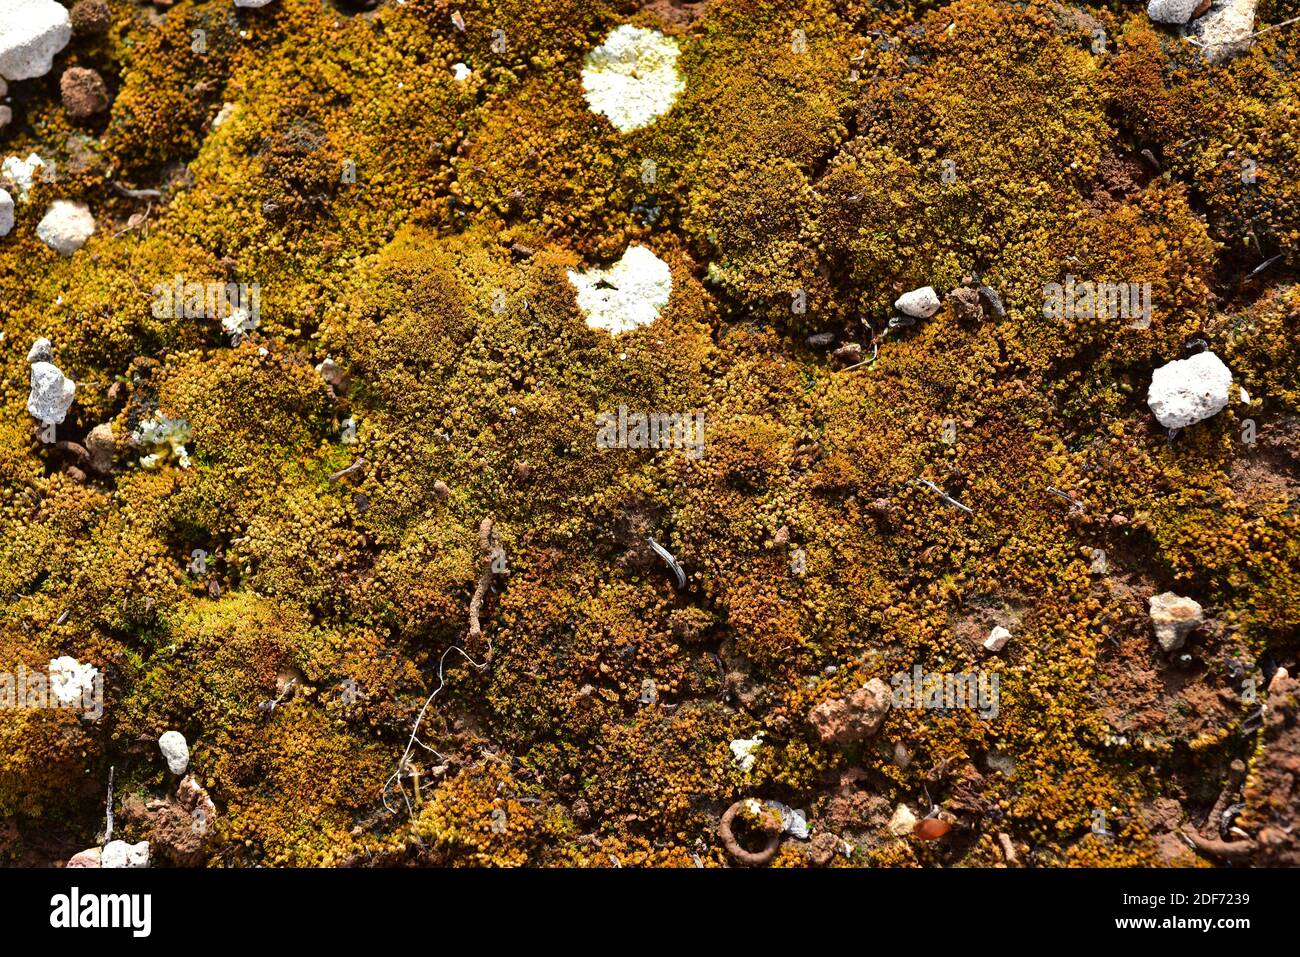 Soft-tuffed beard-moss (Didymodon vinealis) is arid region moss. This photo was taken in L'Ametlla de Mar, Tarragona province, Catalonia, Spain. Stock Photo